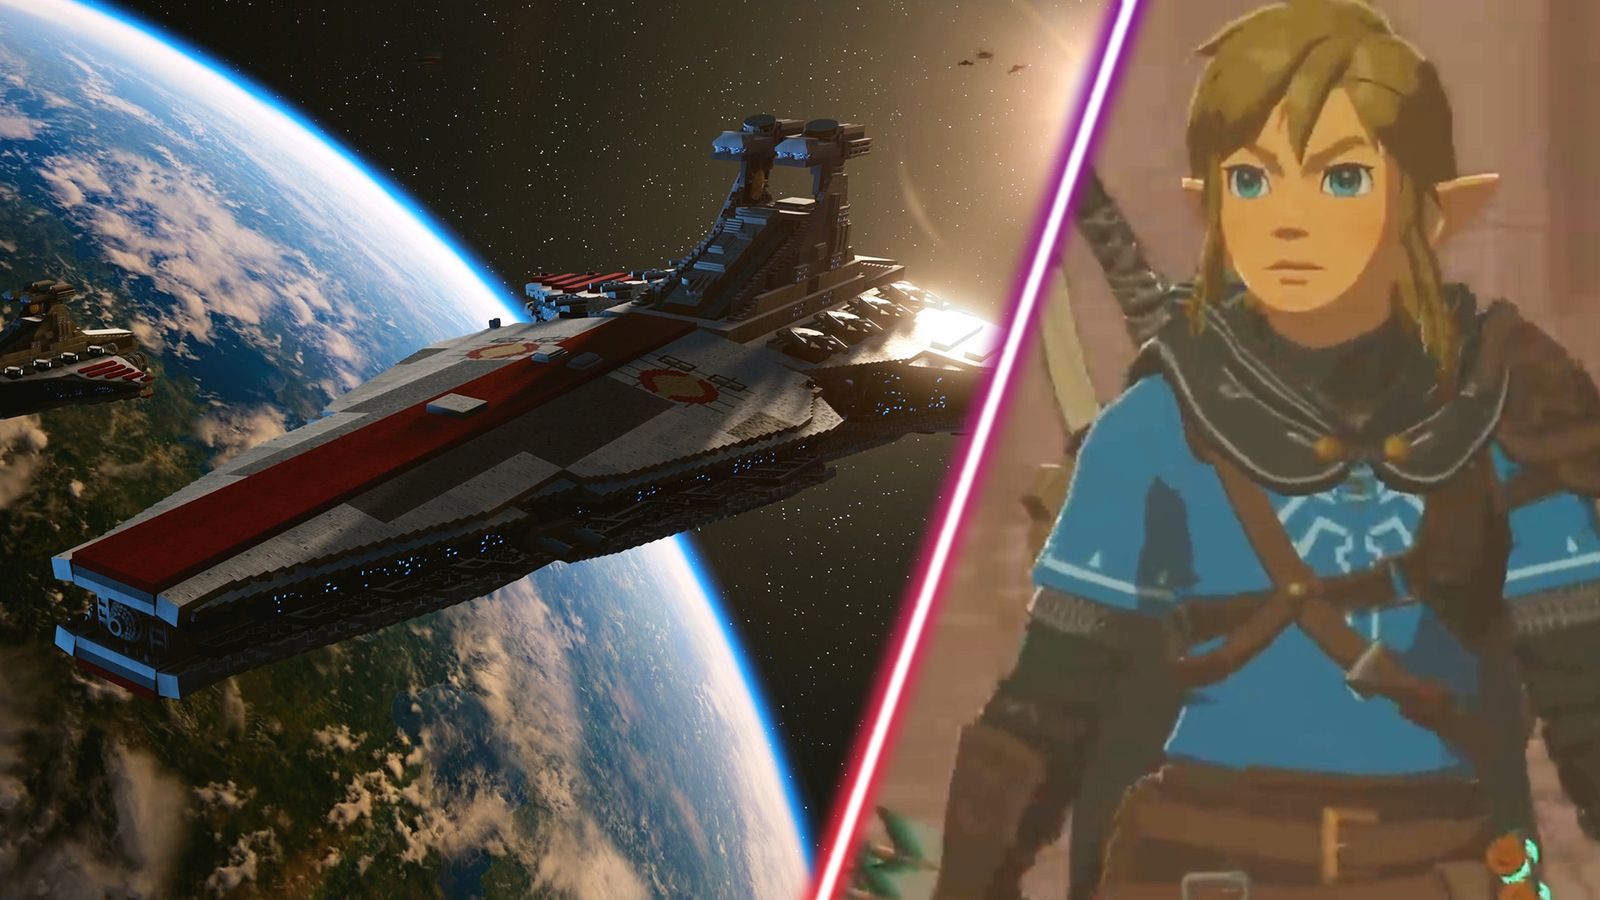 Link in The Legend of Zelda: Tears of the Kingdom alongside a Star Destroyer from Star Wars.